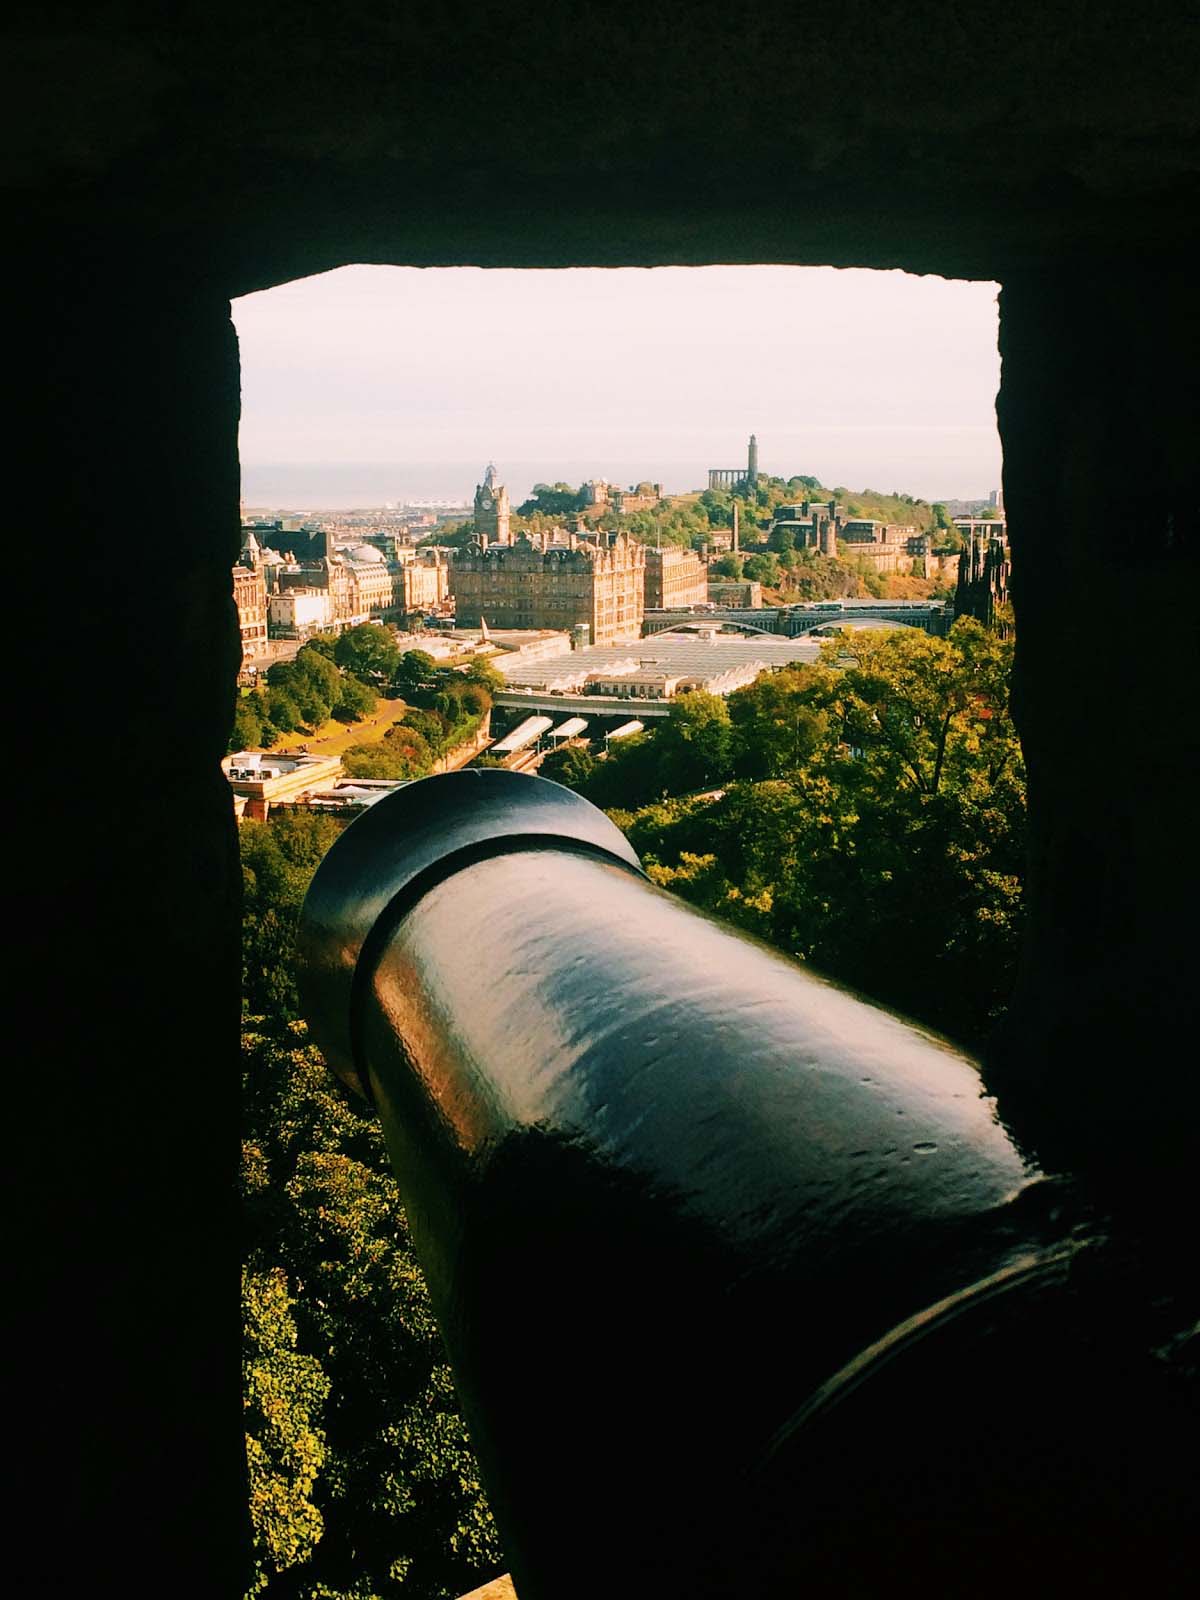 Cannons loom large over Edinburgh